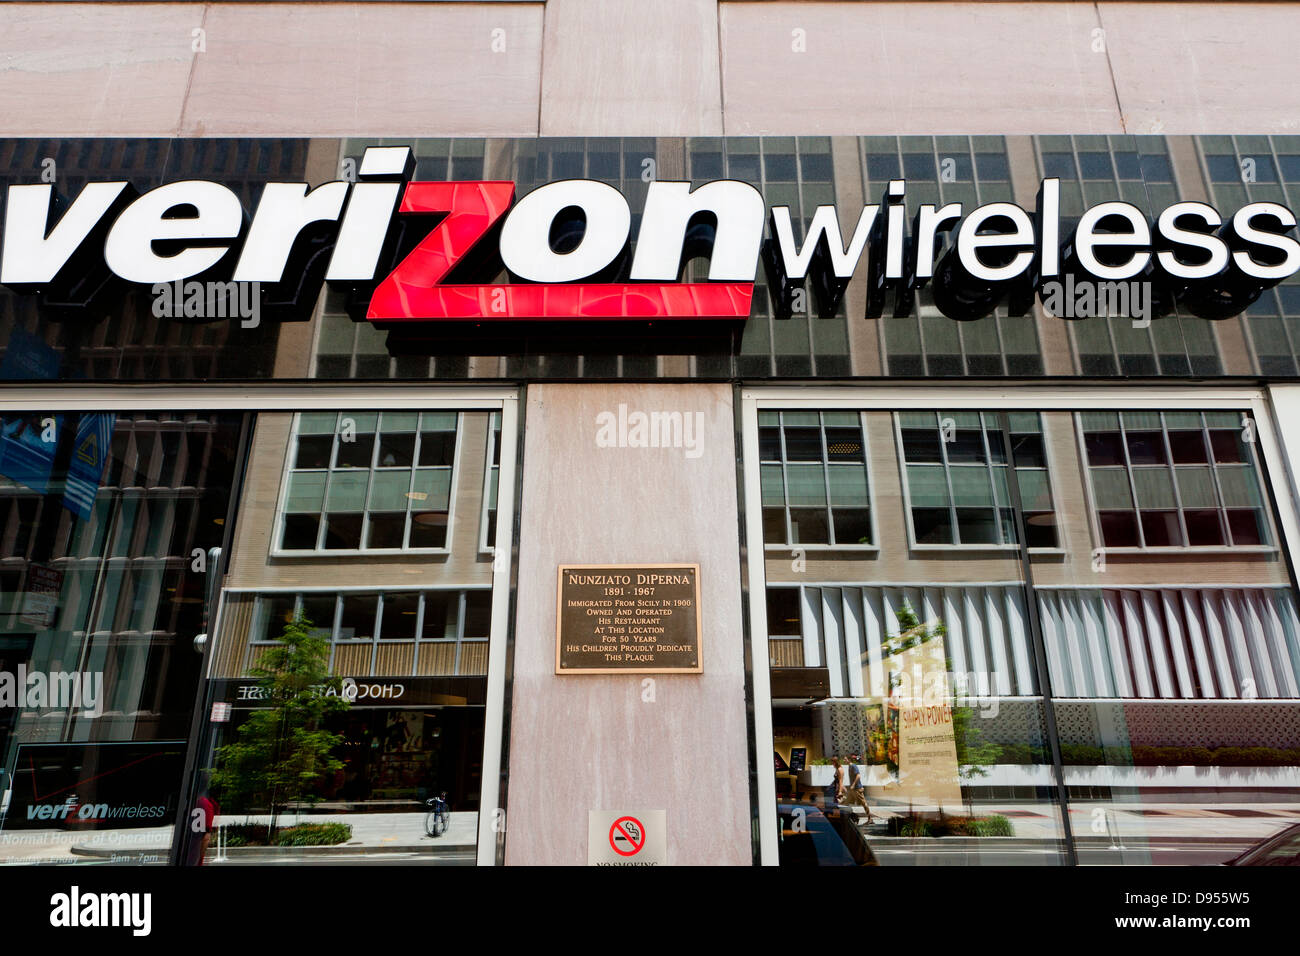 Verizon Wireless storefront Foto Stock